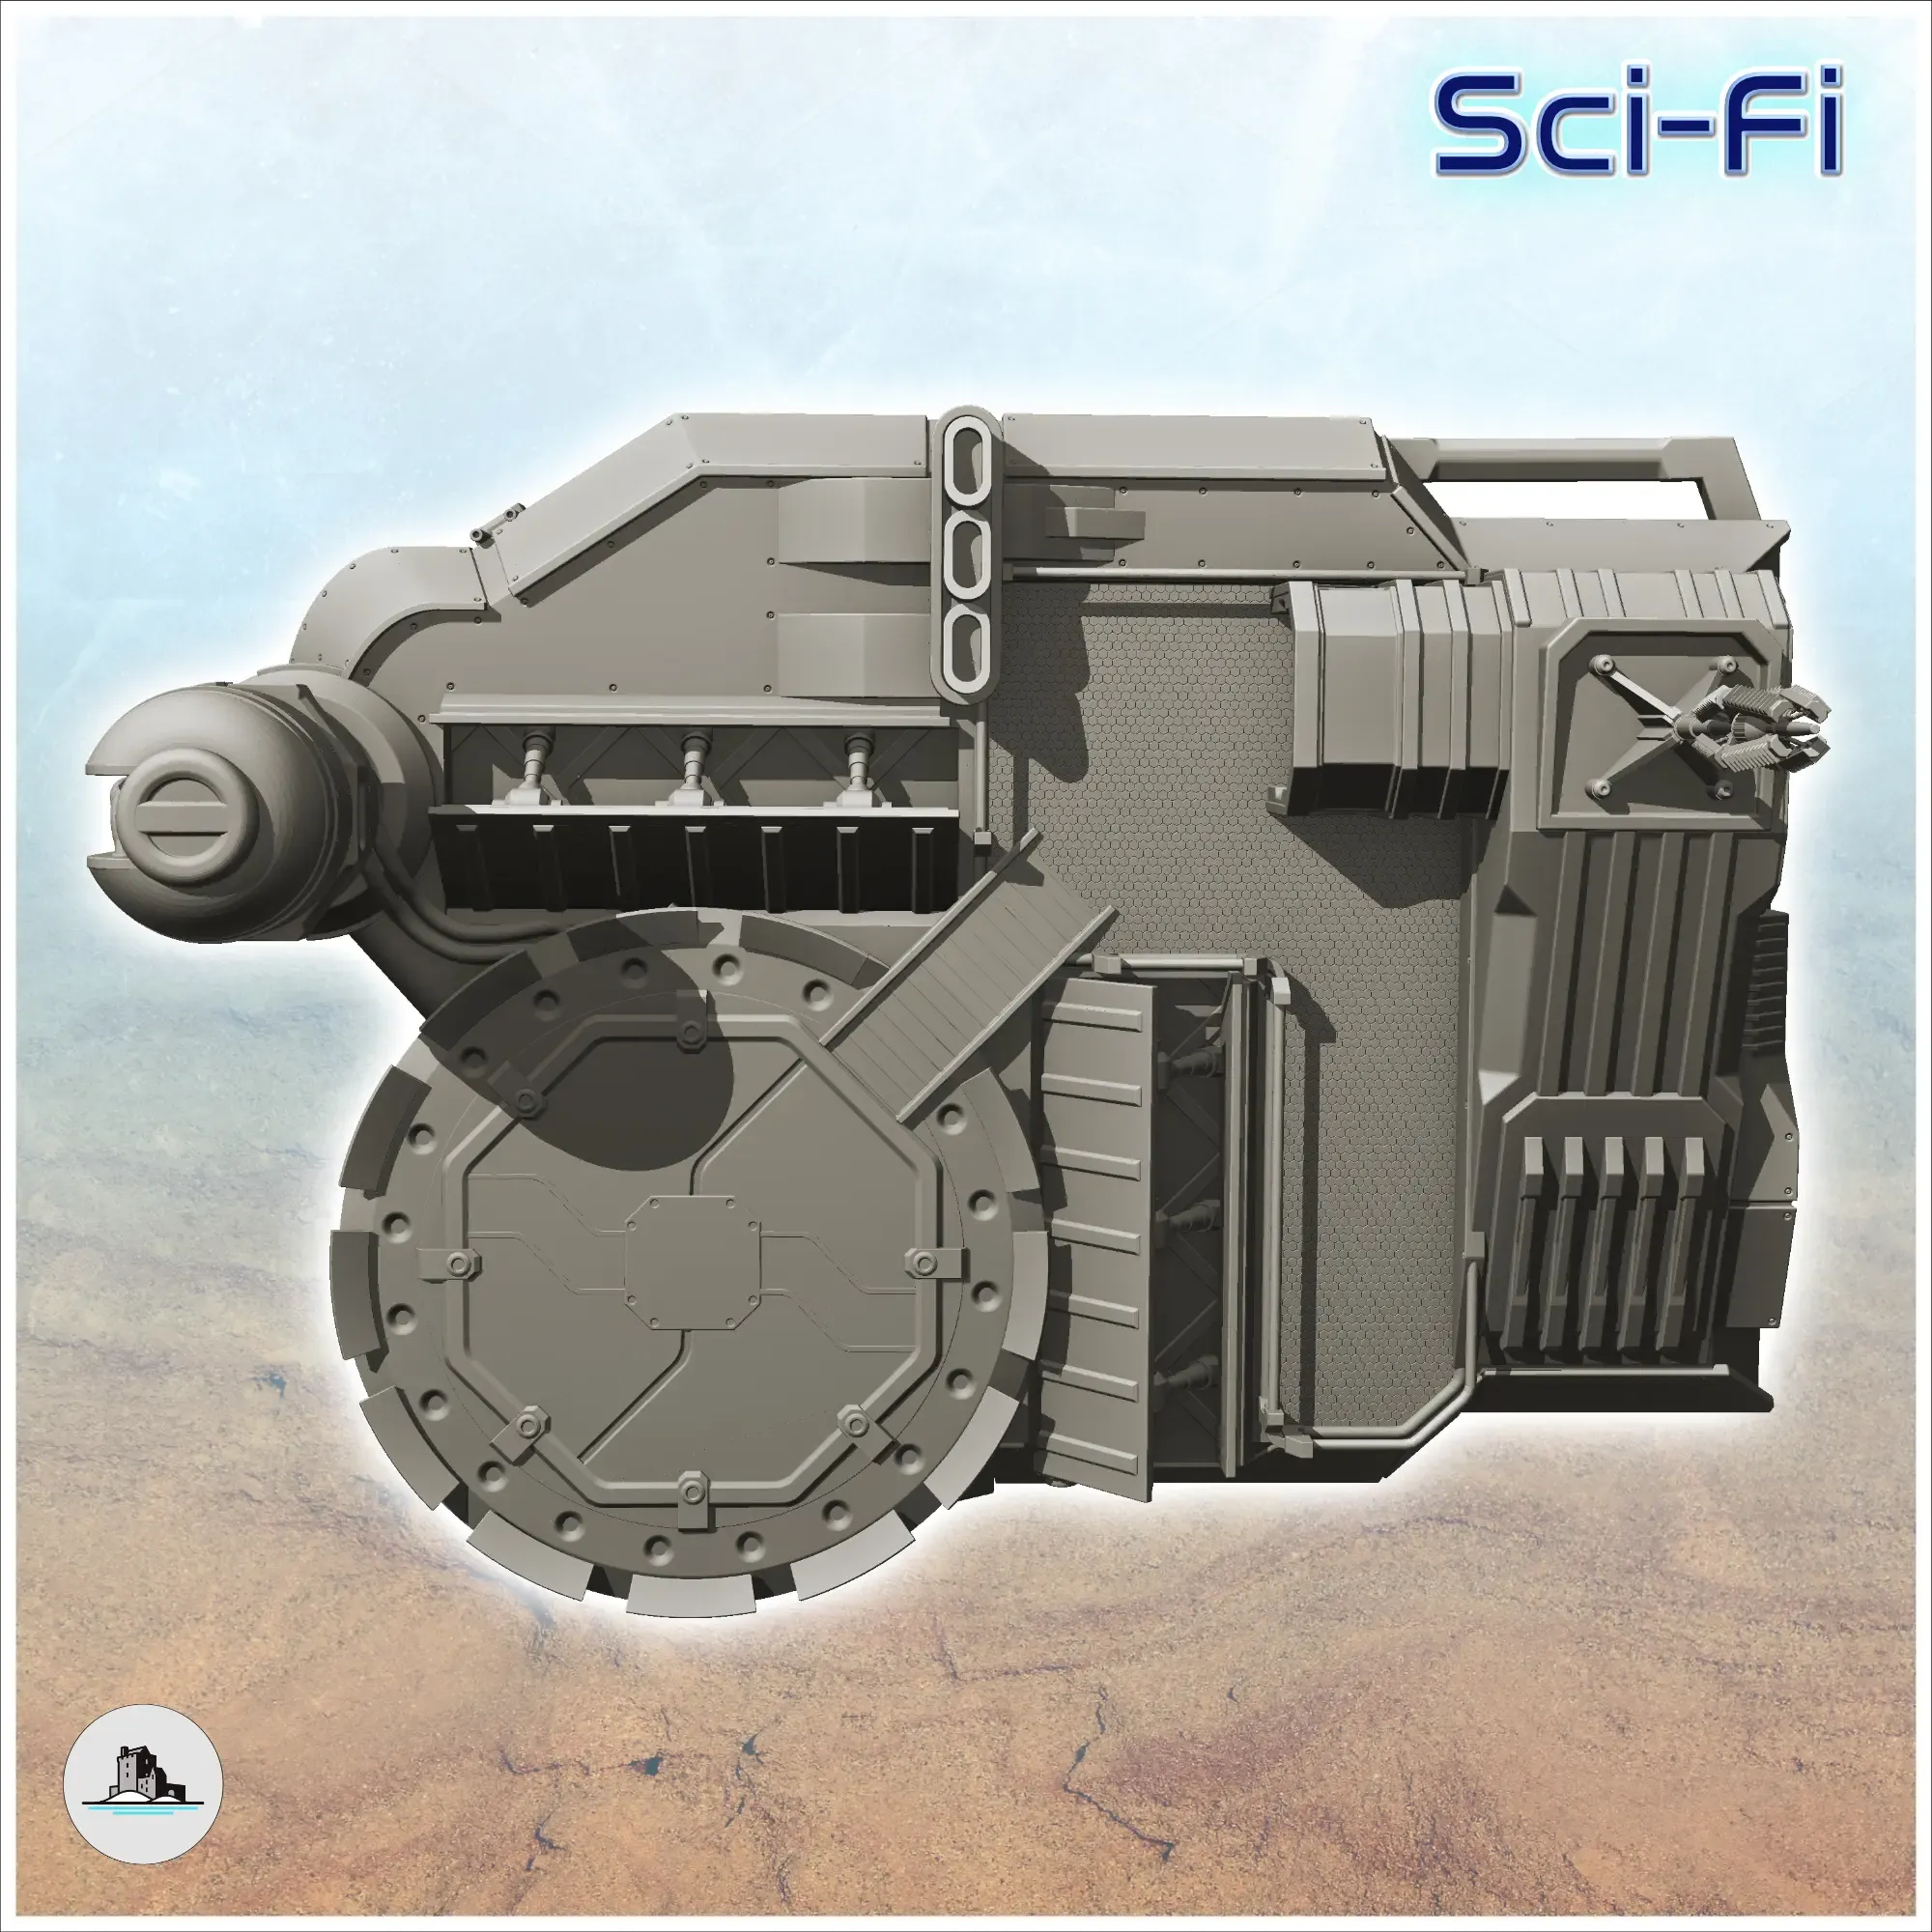 Reinforced command base - Terrain Scifi Science fiction SF